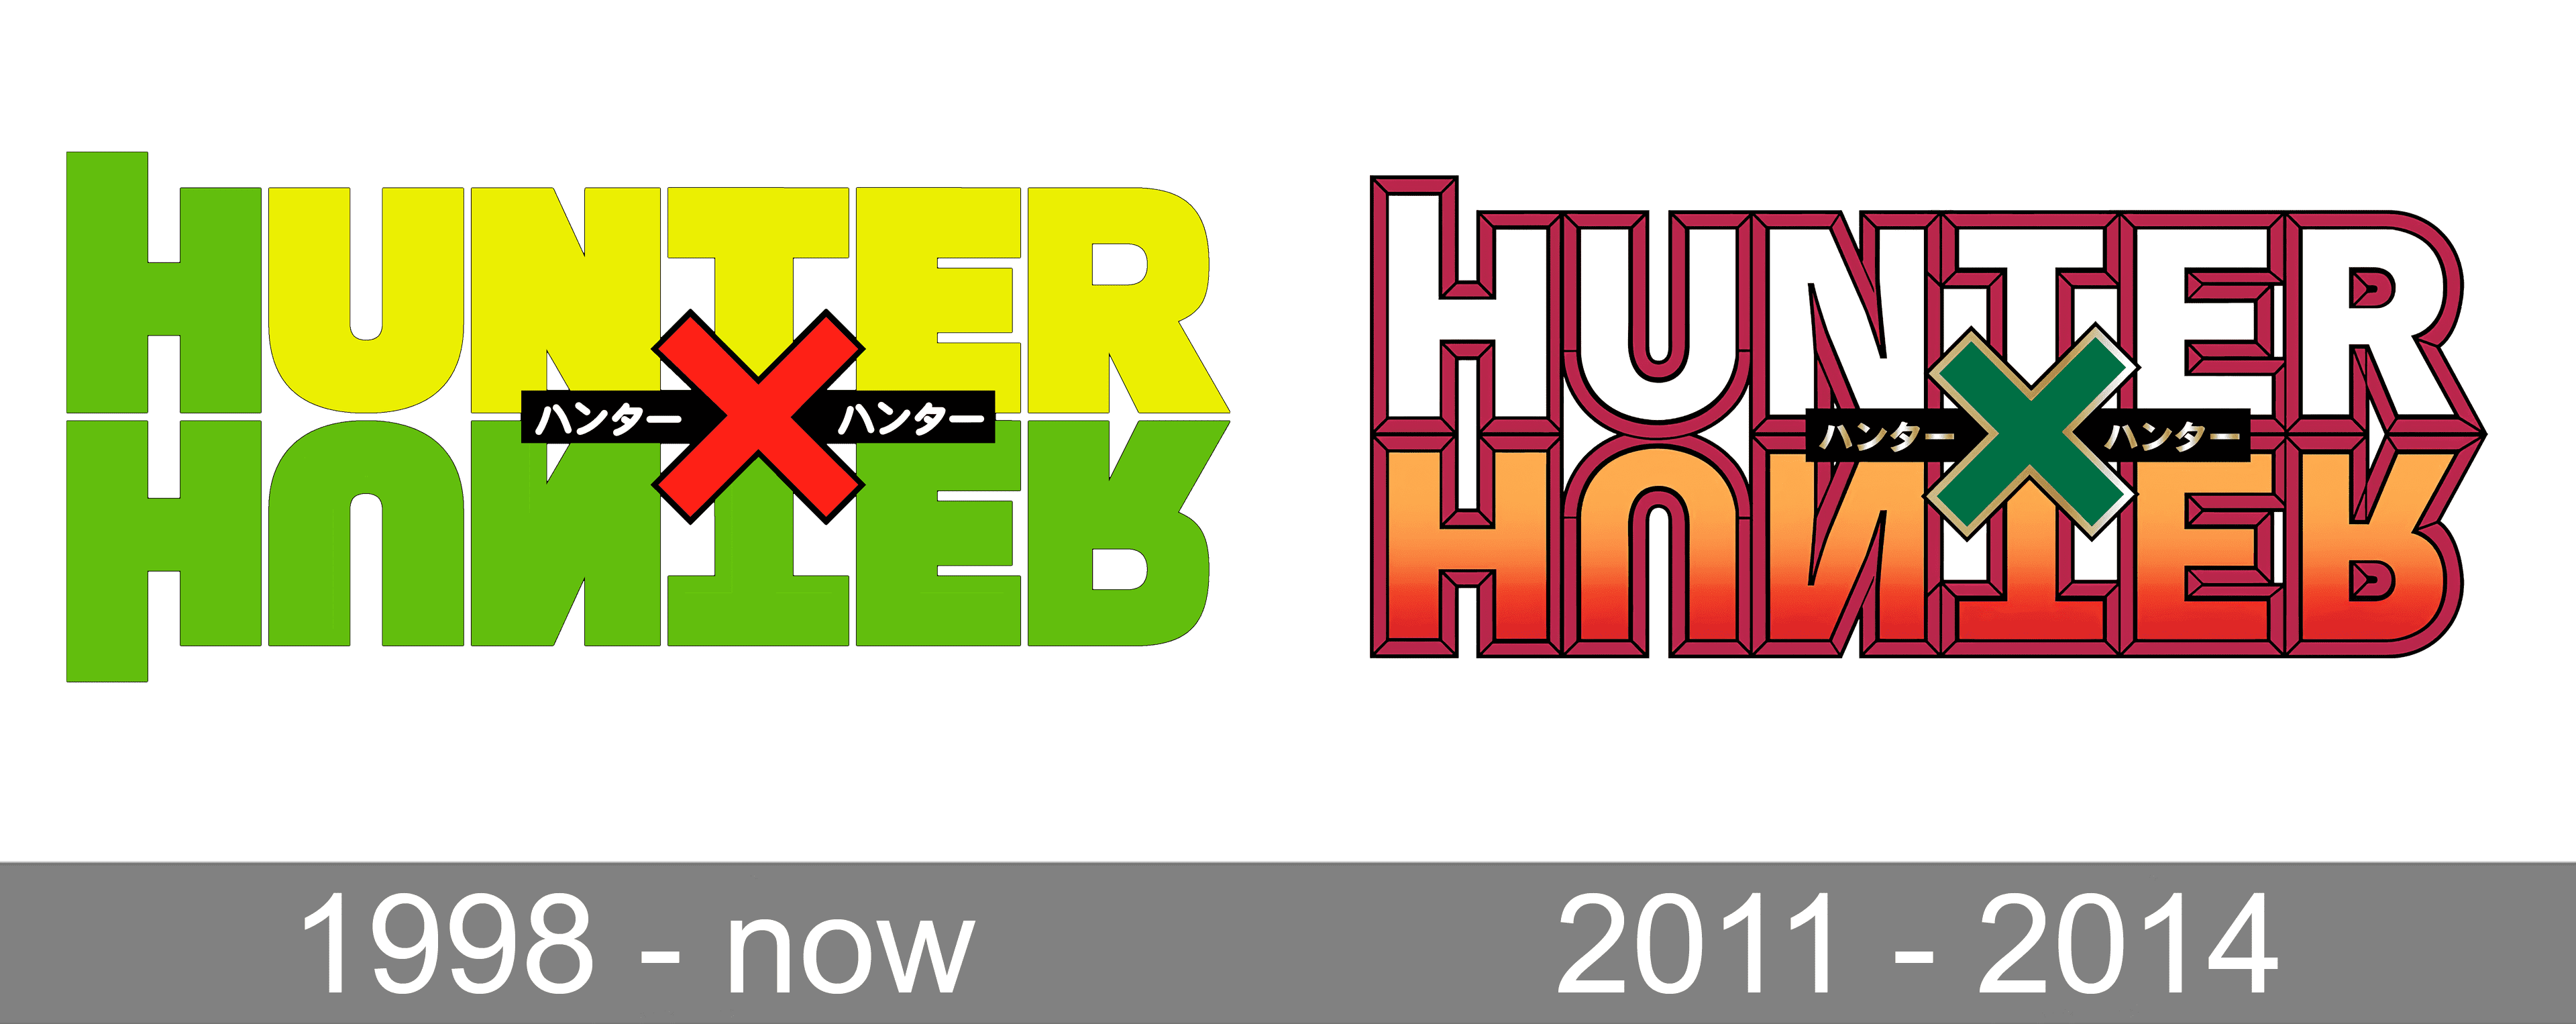 Hunter x Hunter (TV Series 2011-2014) - Story Arcs (Story Arc